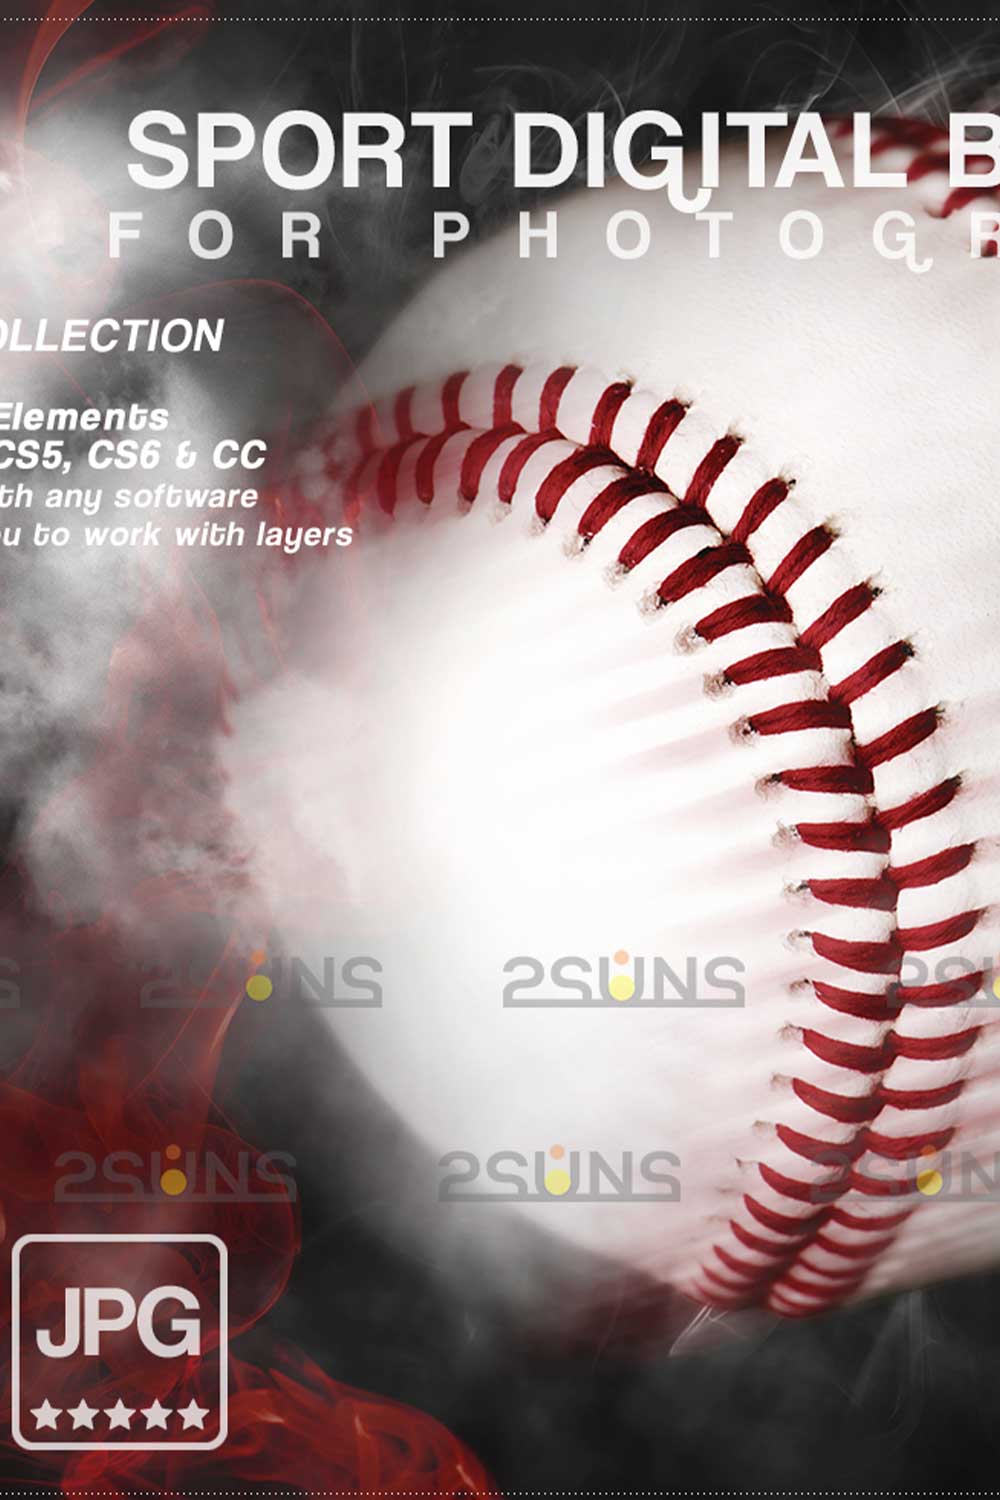 Baseball Ball Backdrop Sports Digital Photo Background Pinterest Image.